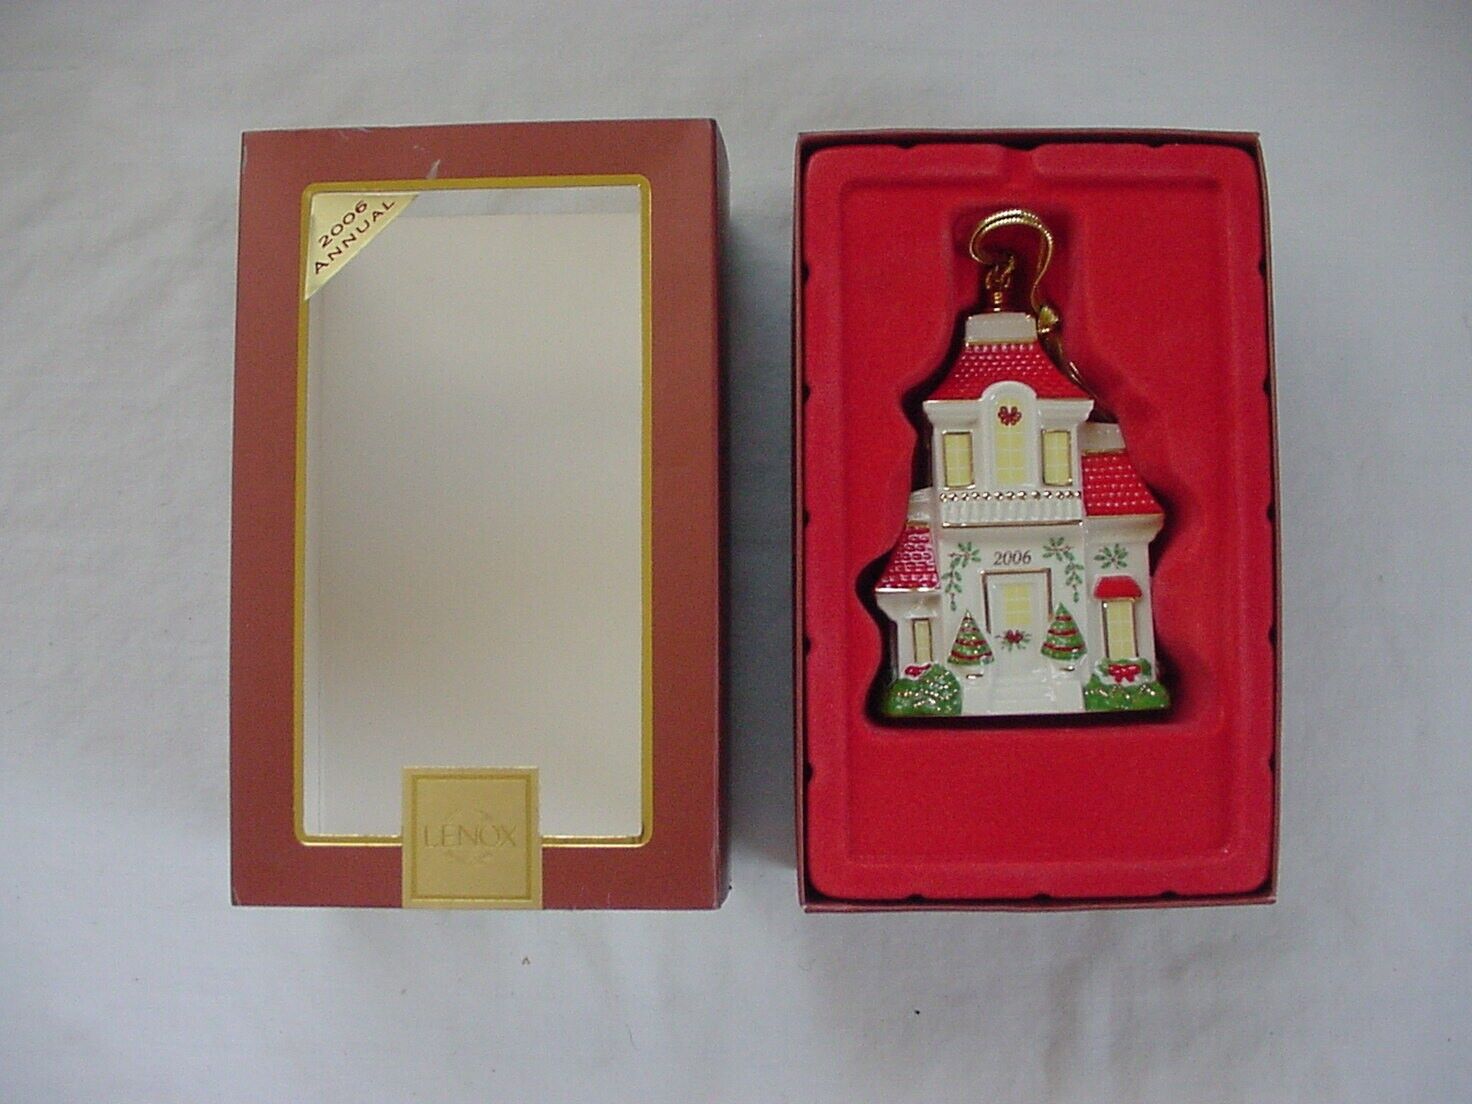 2006 Lenox annual Christmas ornament